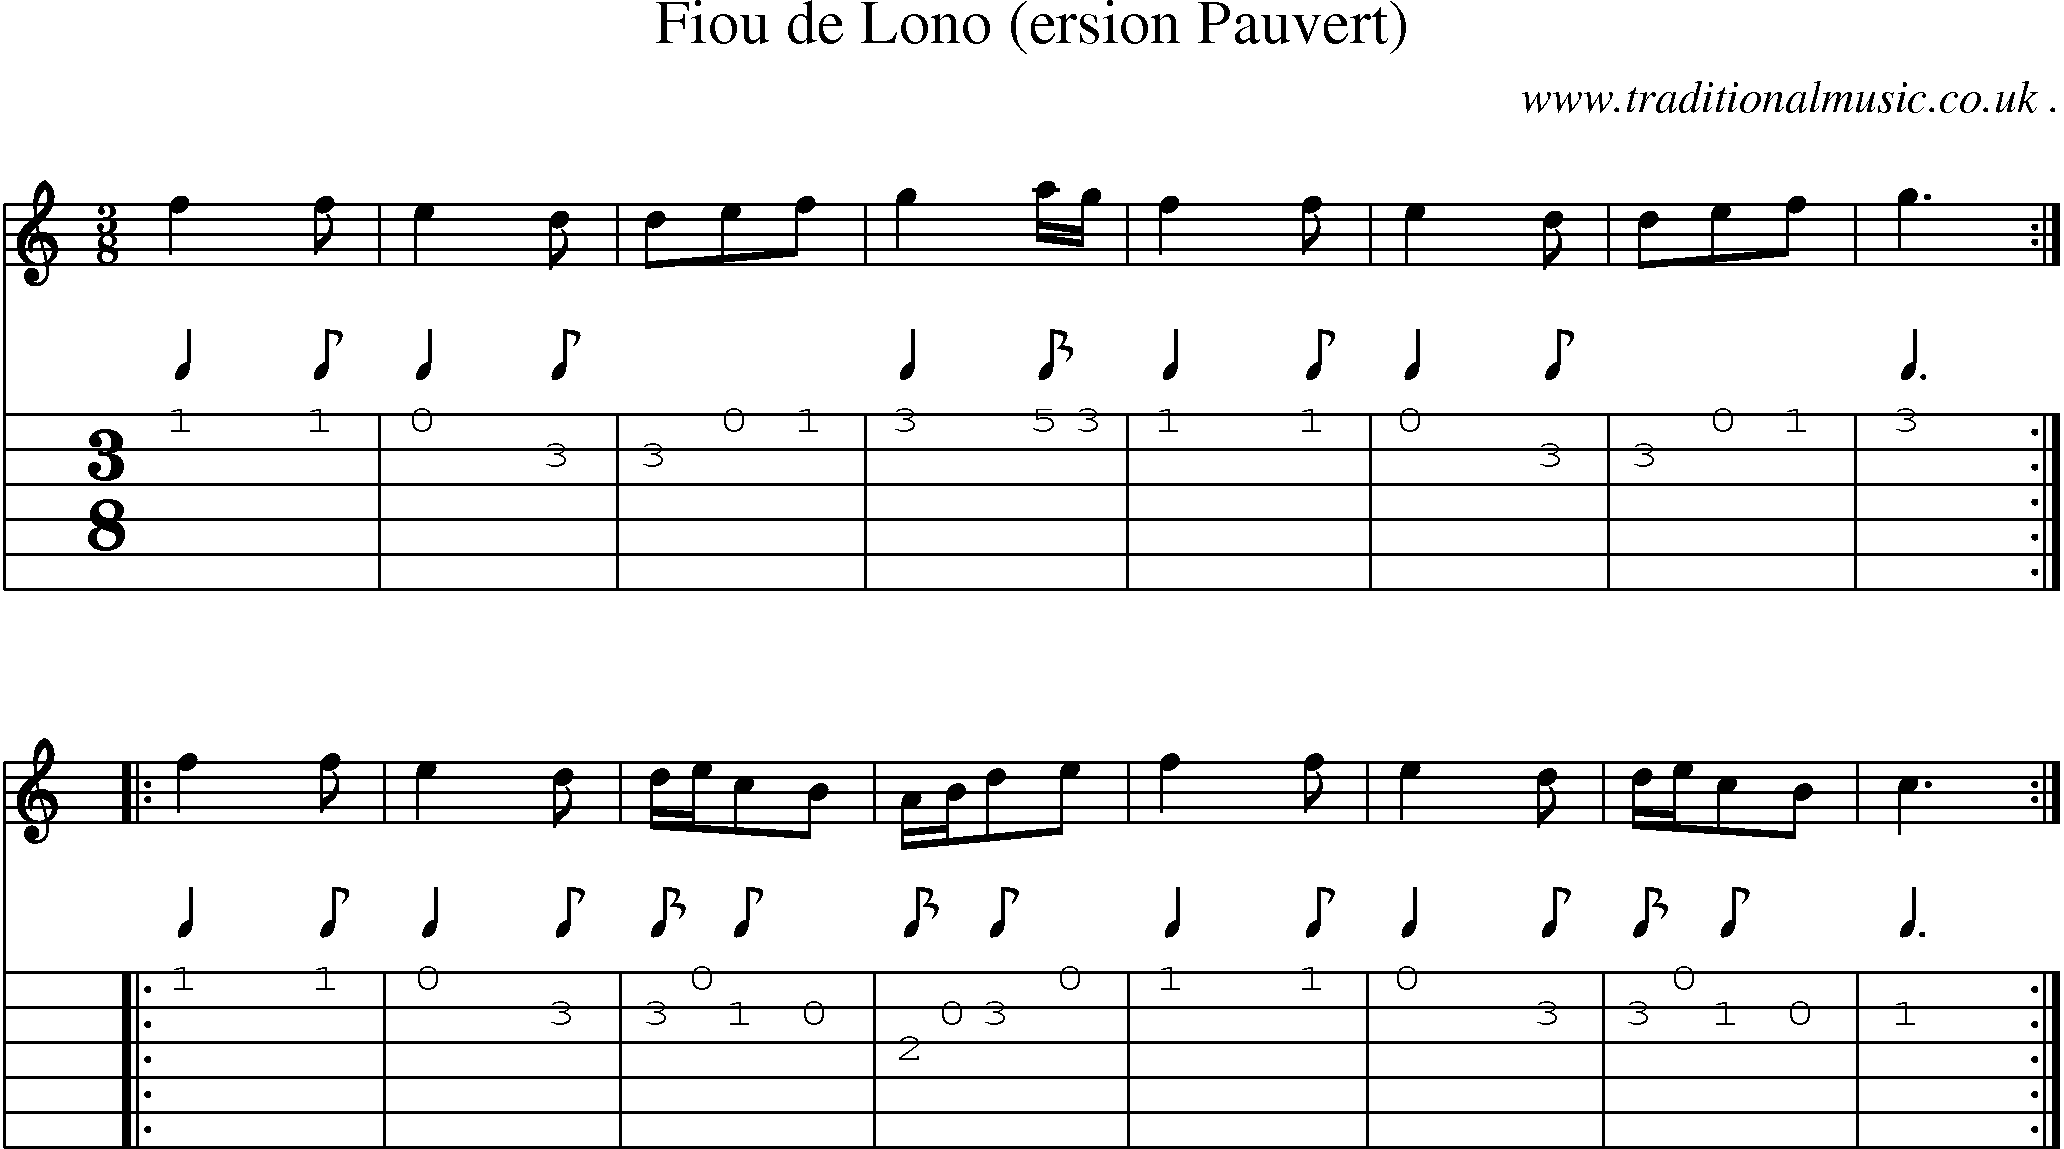 Sheet-Music and Guitar Tabs for Fiou De Lono (ersion Pauvert)